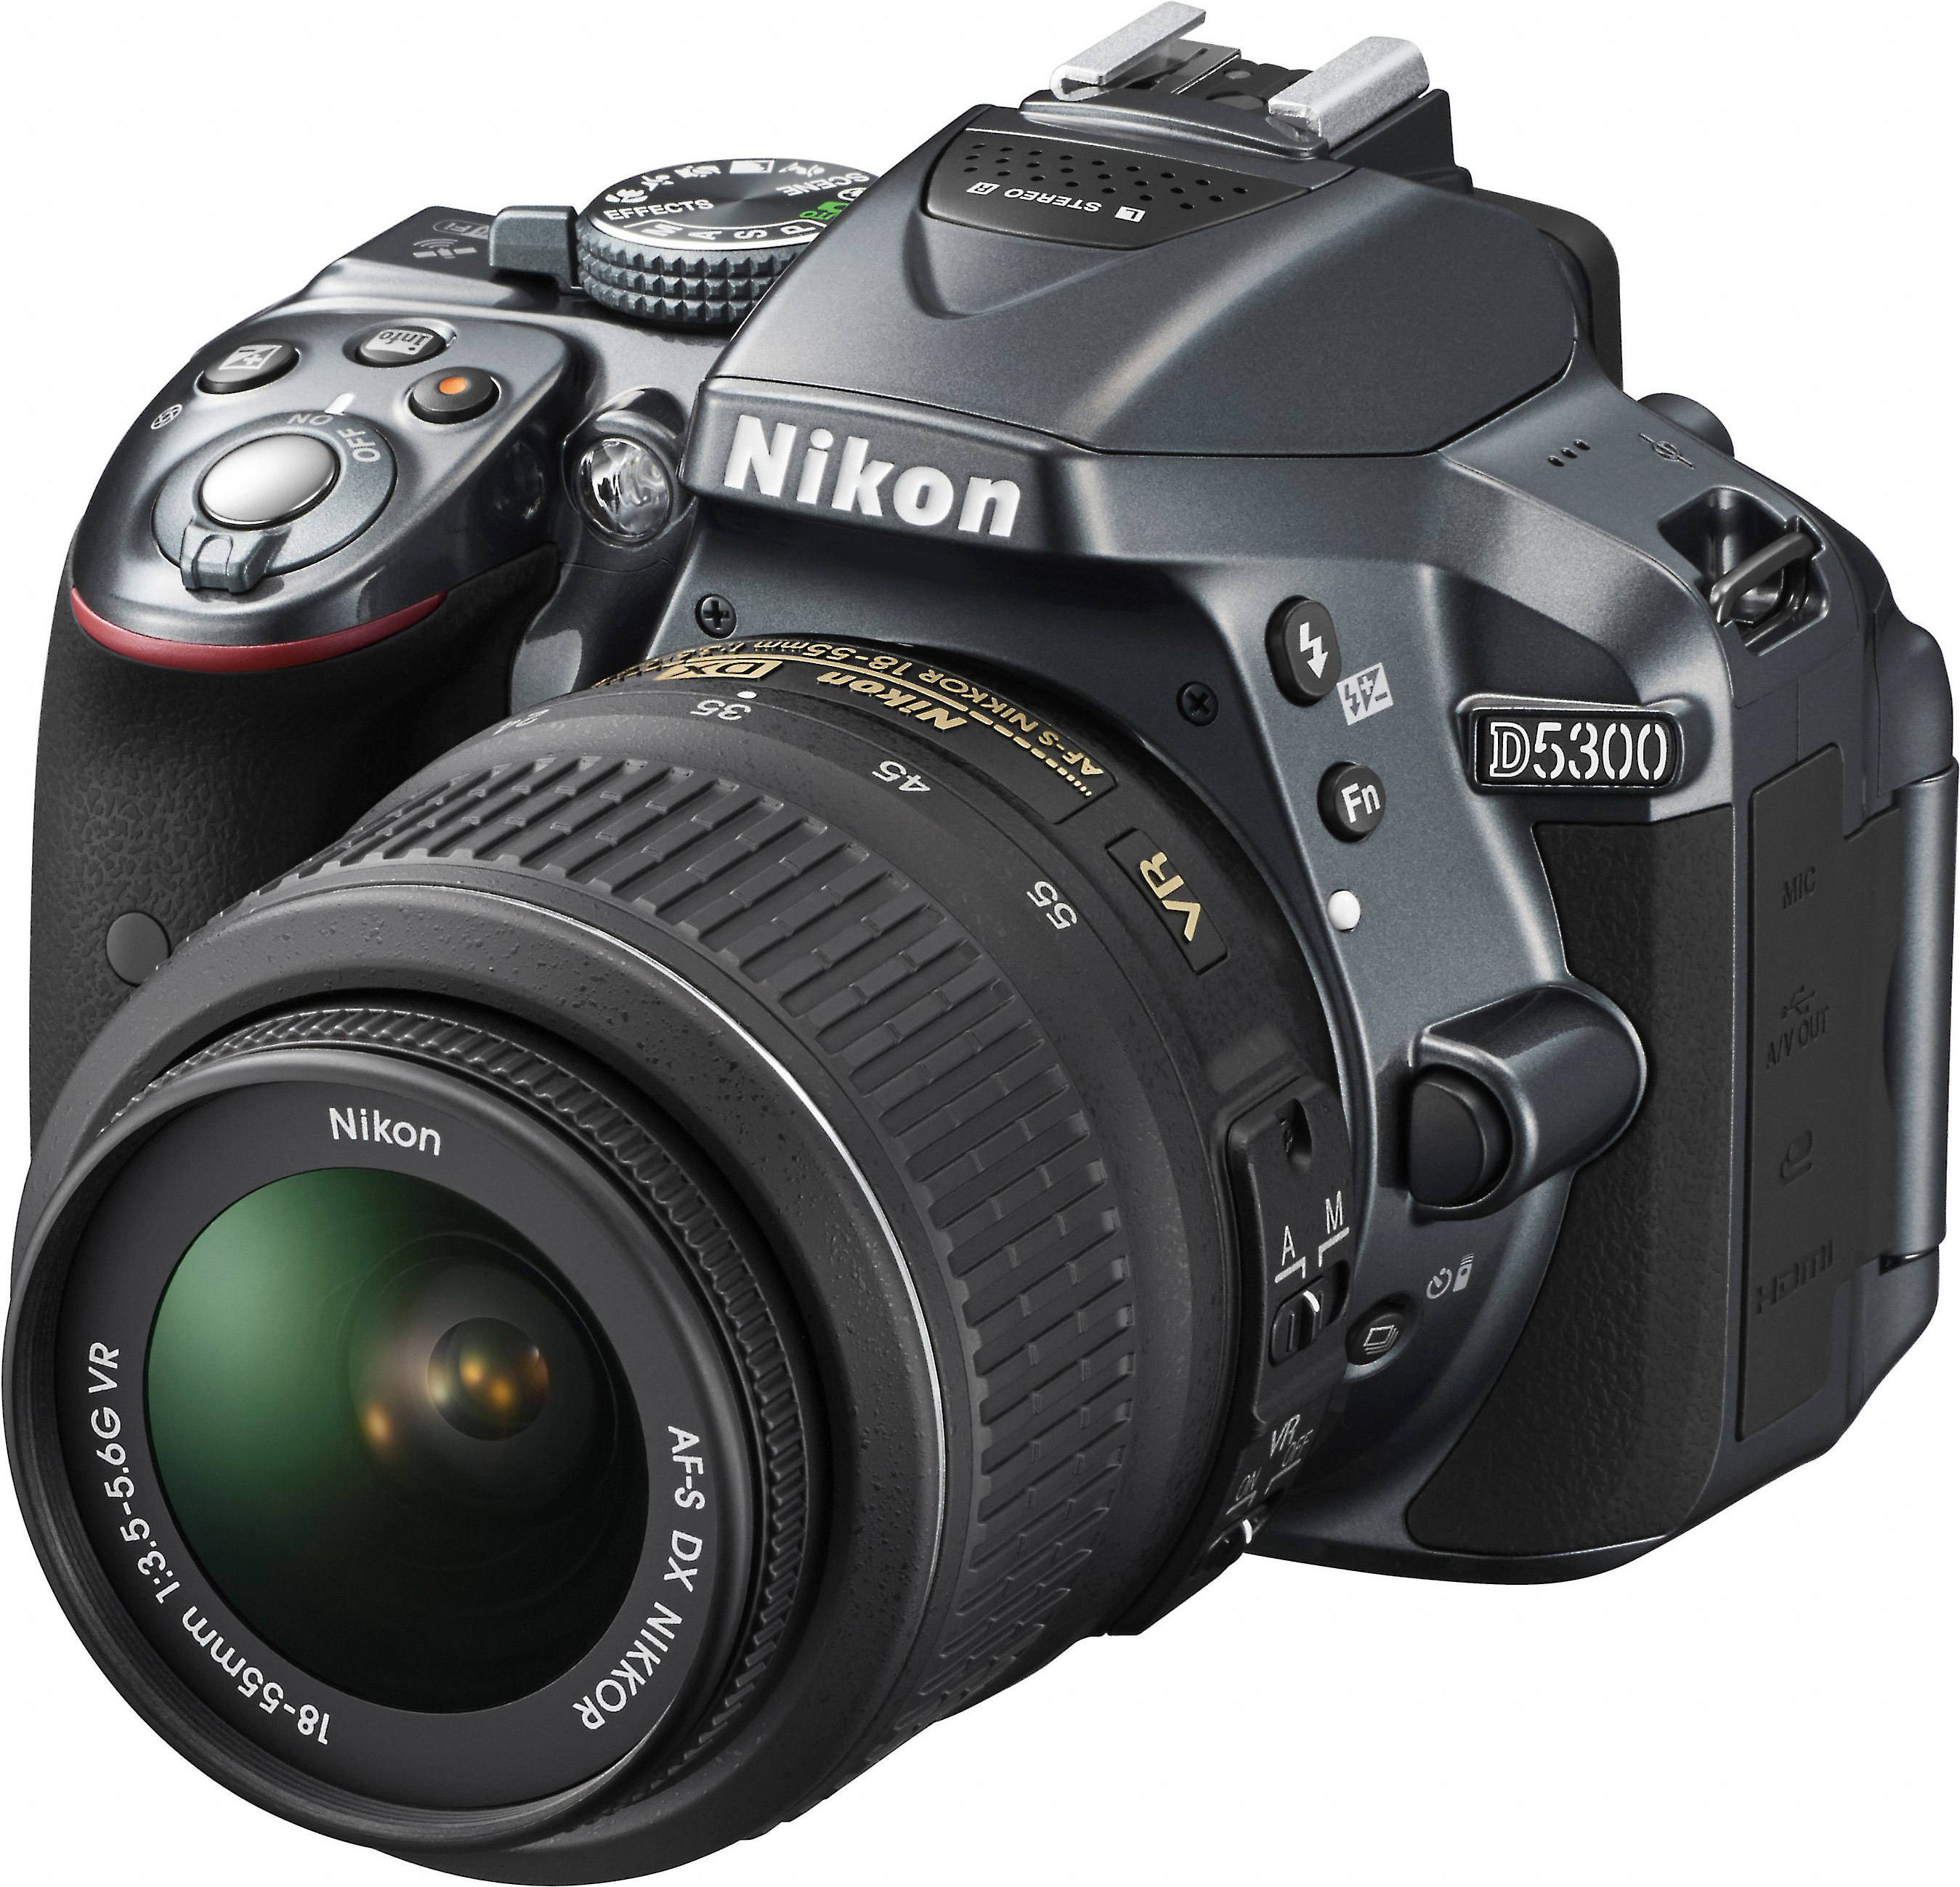 I am Sharing my view New Nikon D5300 Camera Brochure